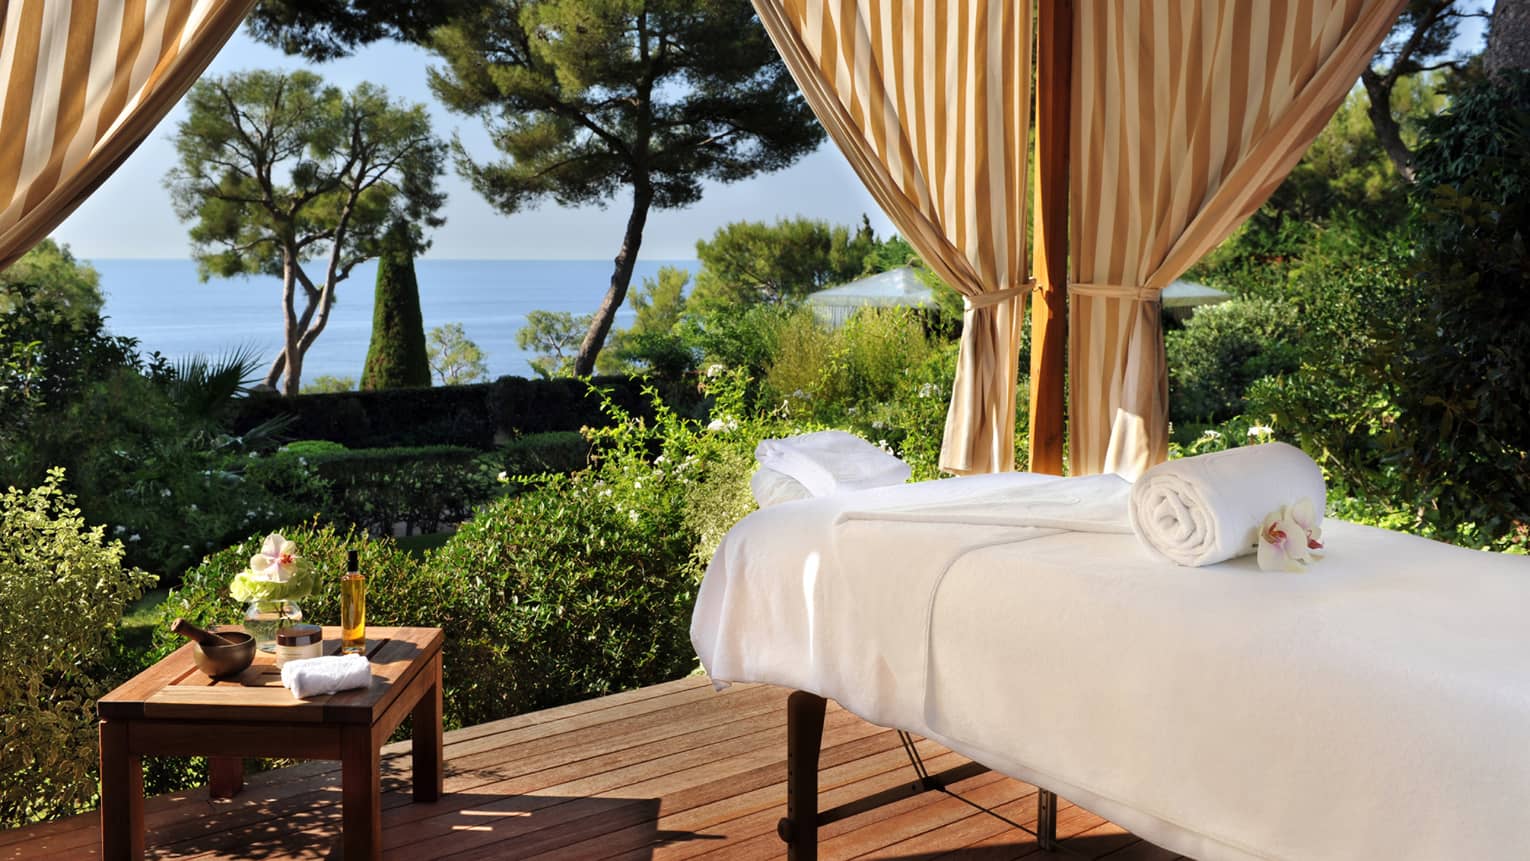 Massage bed on outdoor Spa pavilion overlooking gardens, sea